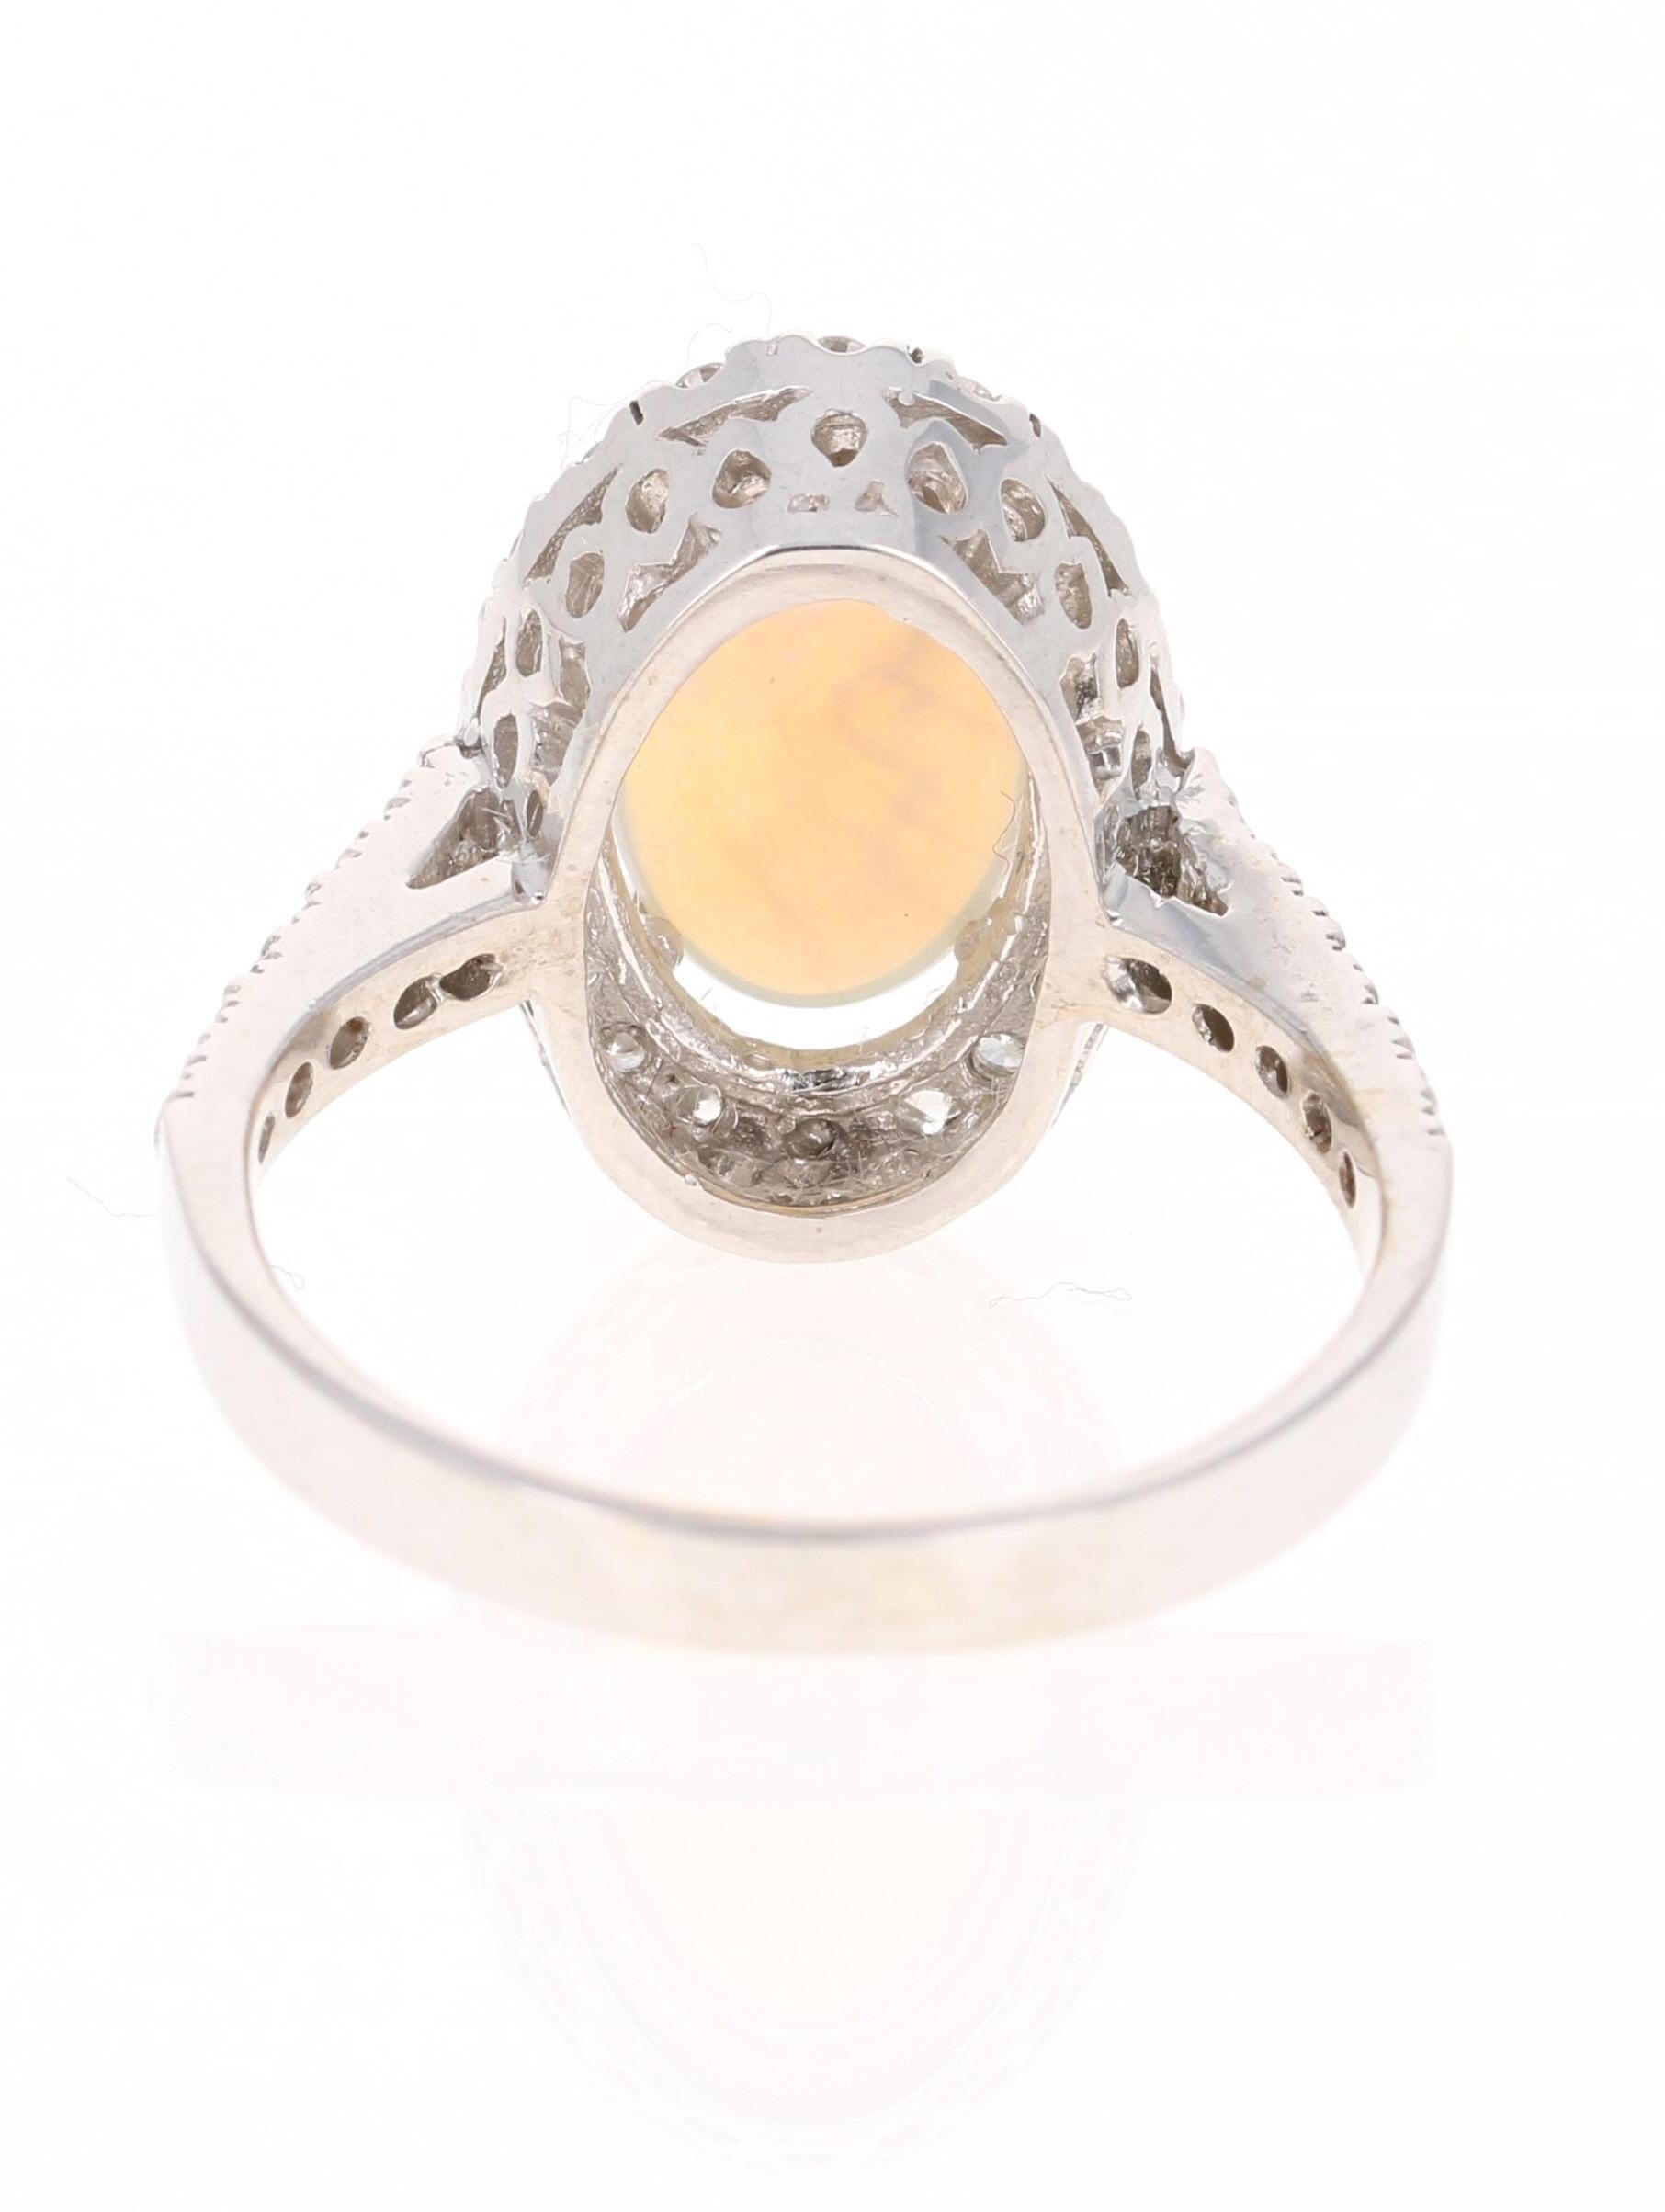 Oval Cut 2.01 Carat Opal Diamond 14 Karat White Gold Ring